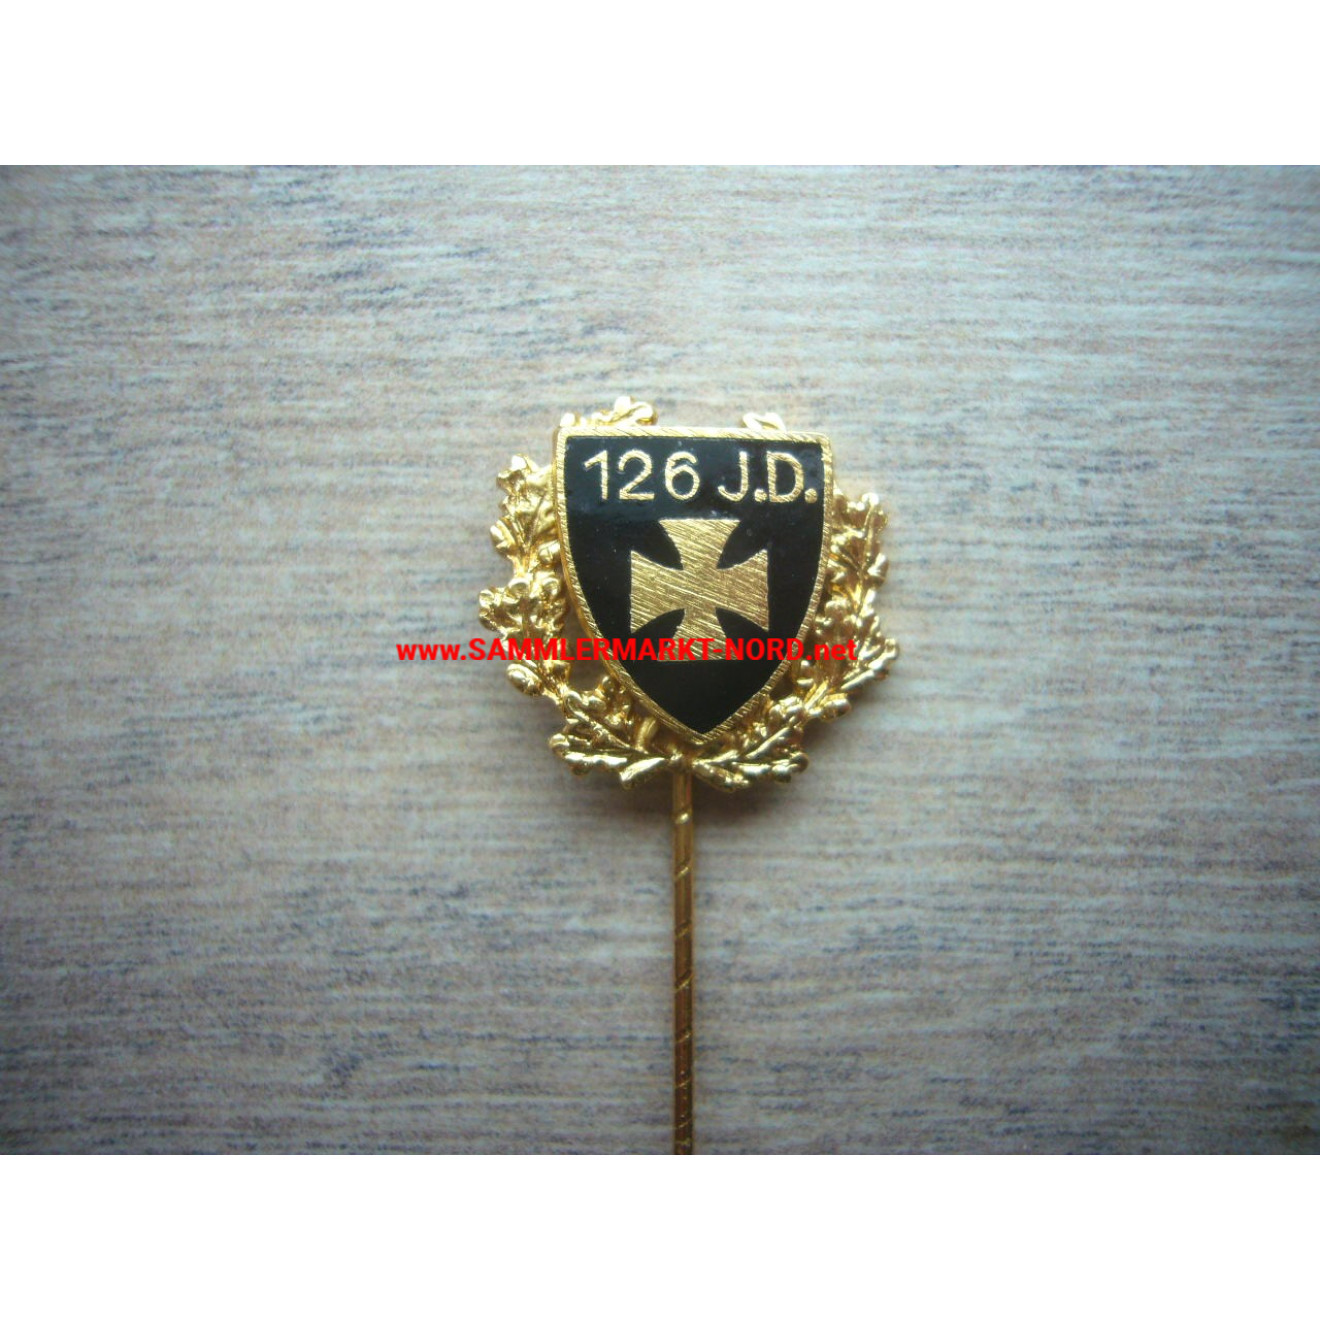 Kameradschaft der 126. Infanterie Division - Goldene Ehrennadel